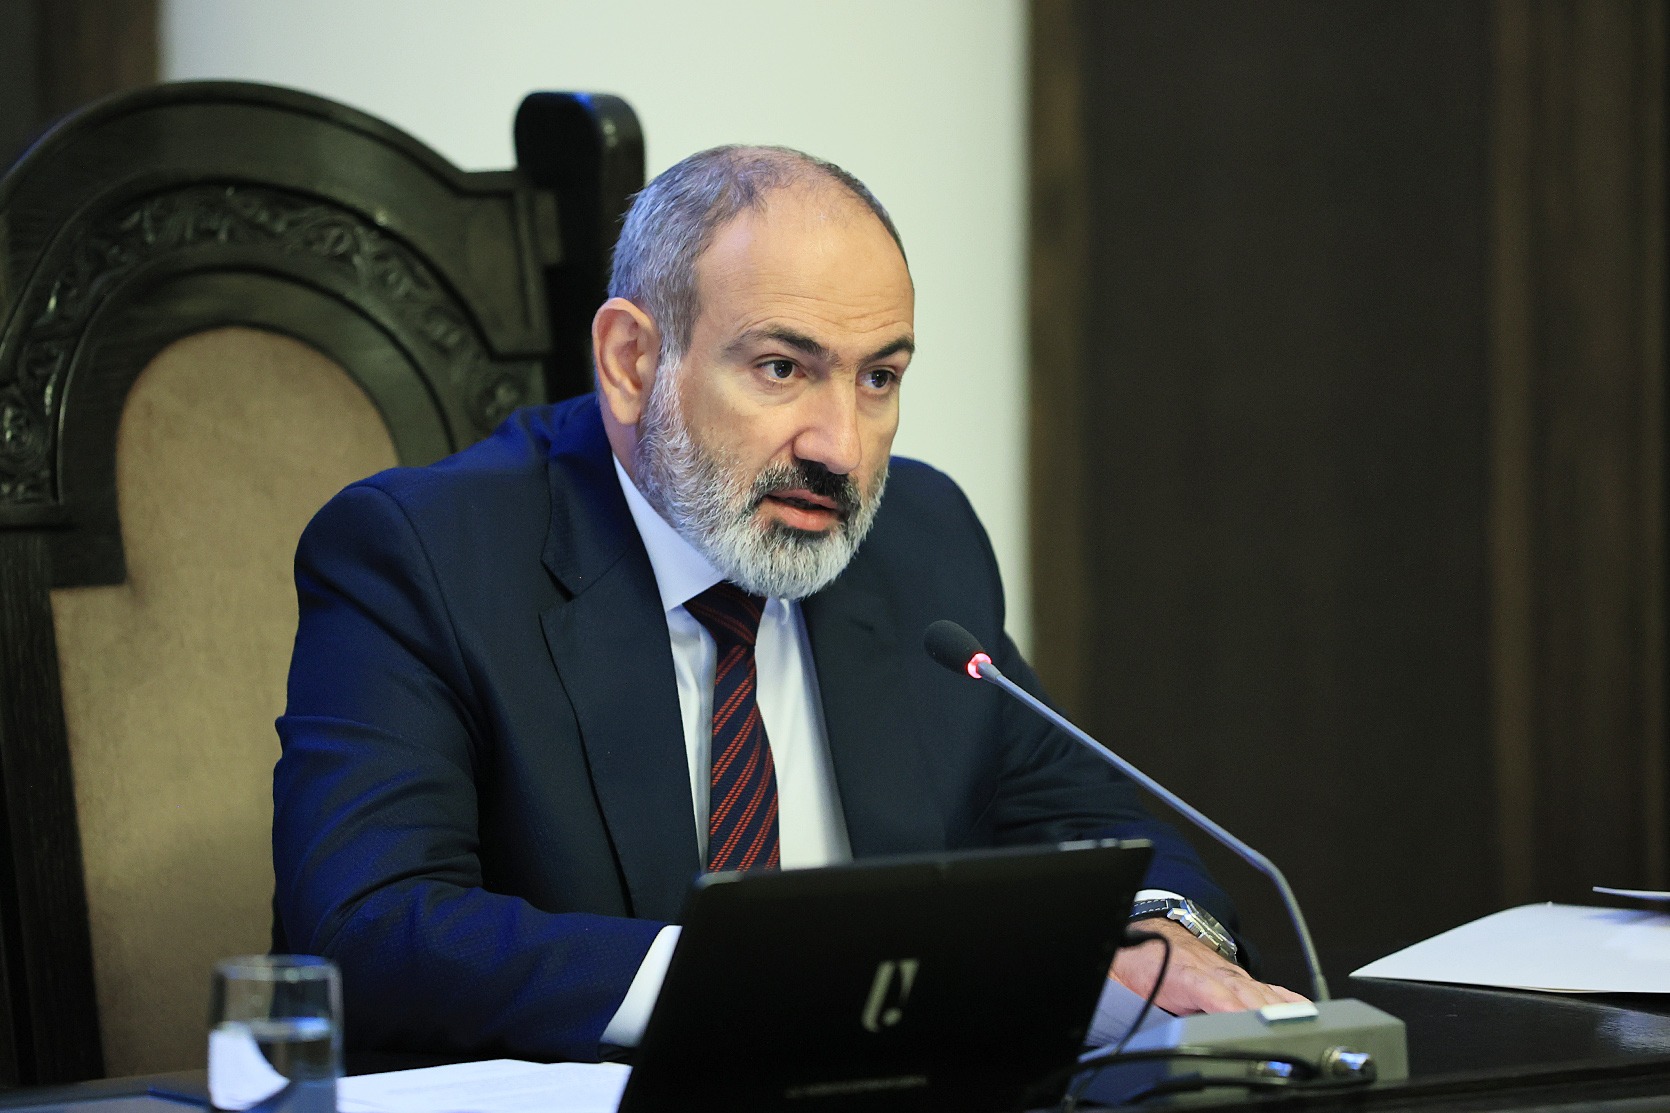 Nikol Pashinyan: There is no serviceman of the Republic of Armenia in Nagorno Karabakh